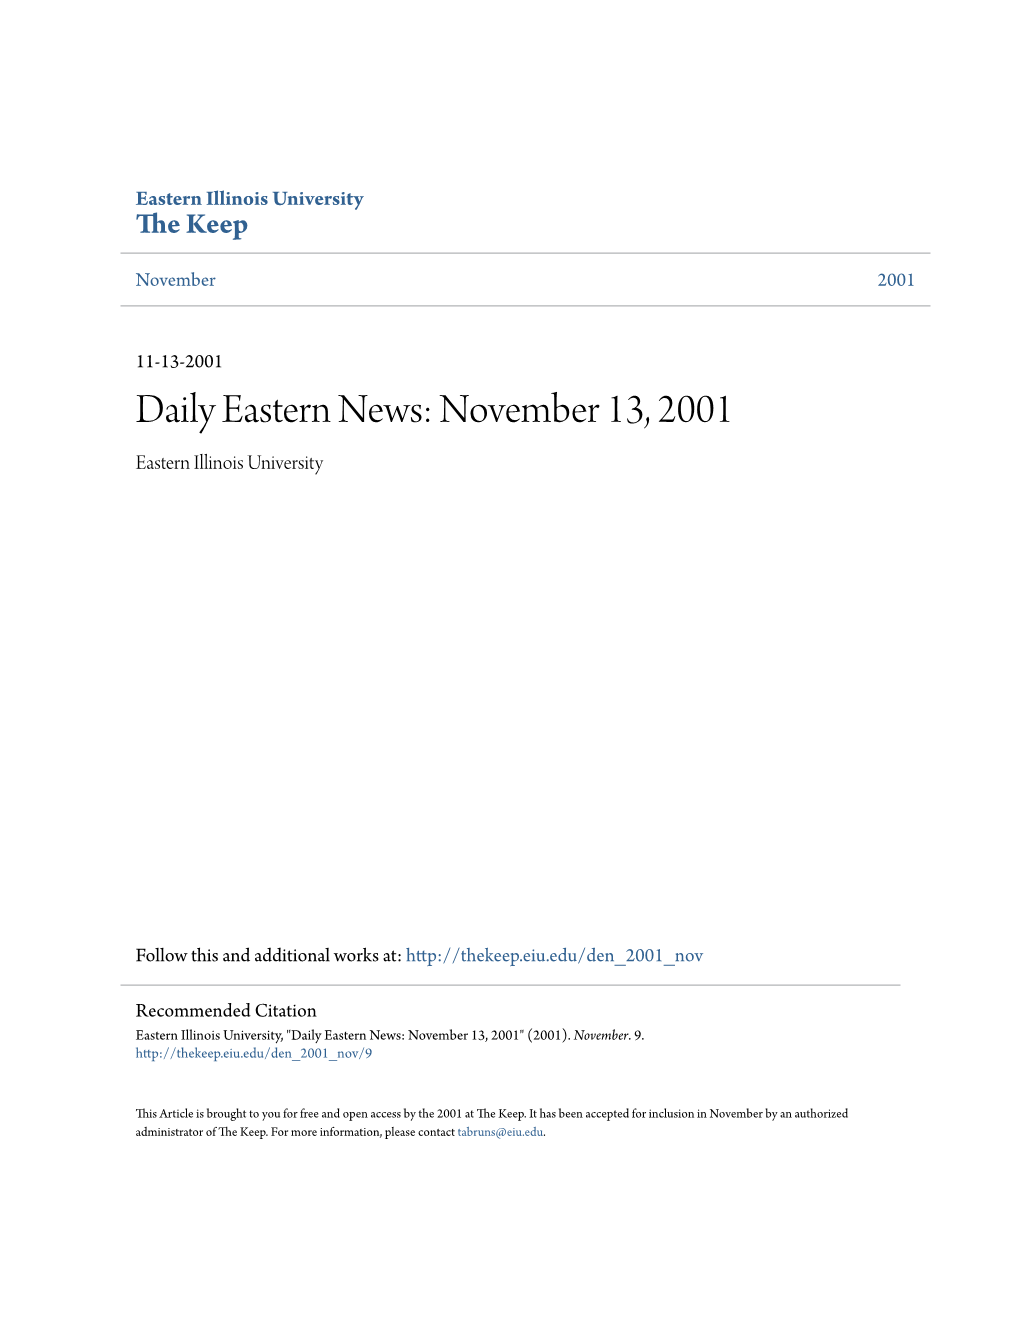 Daily Eastern News: November 13, 2001 Eastern Illinois University